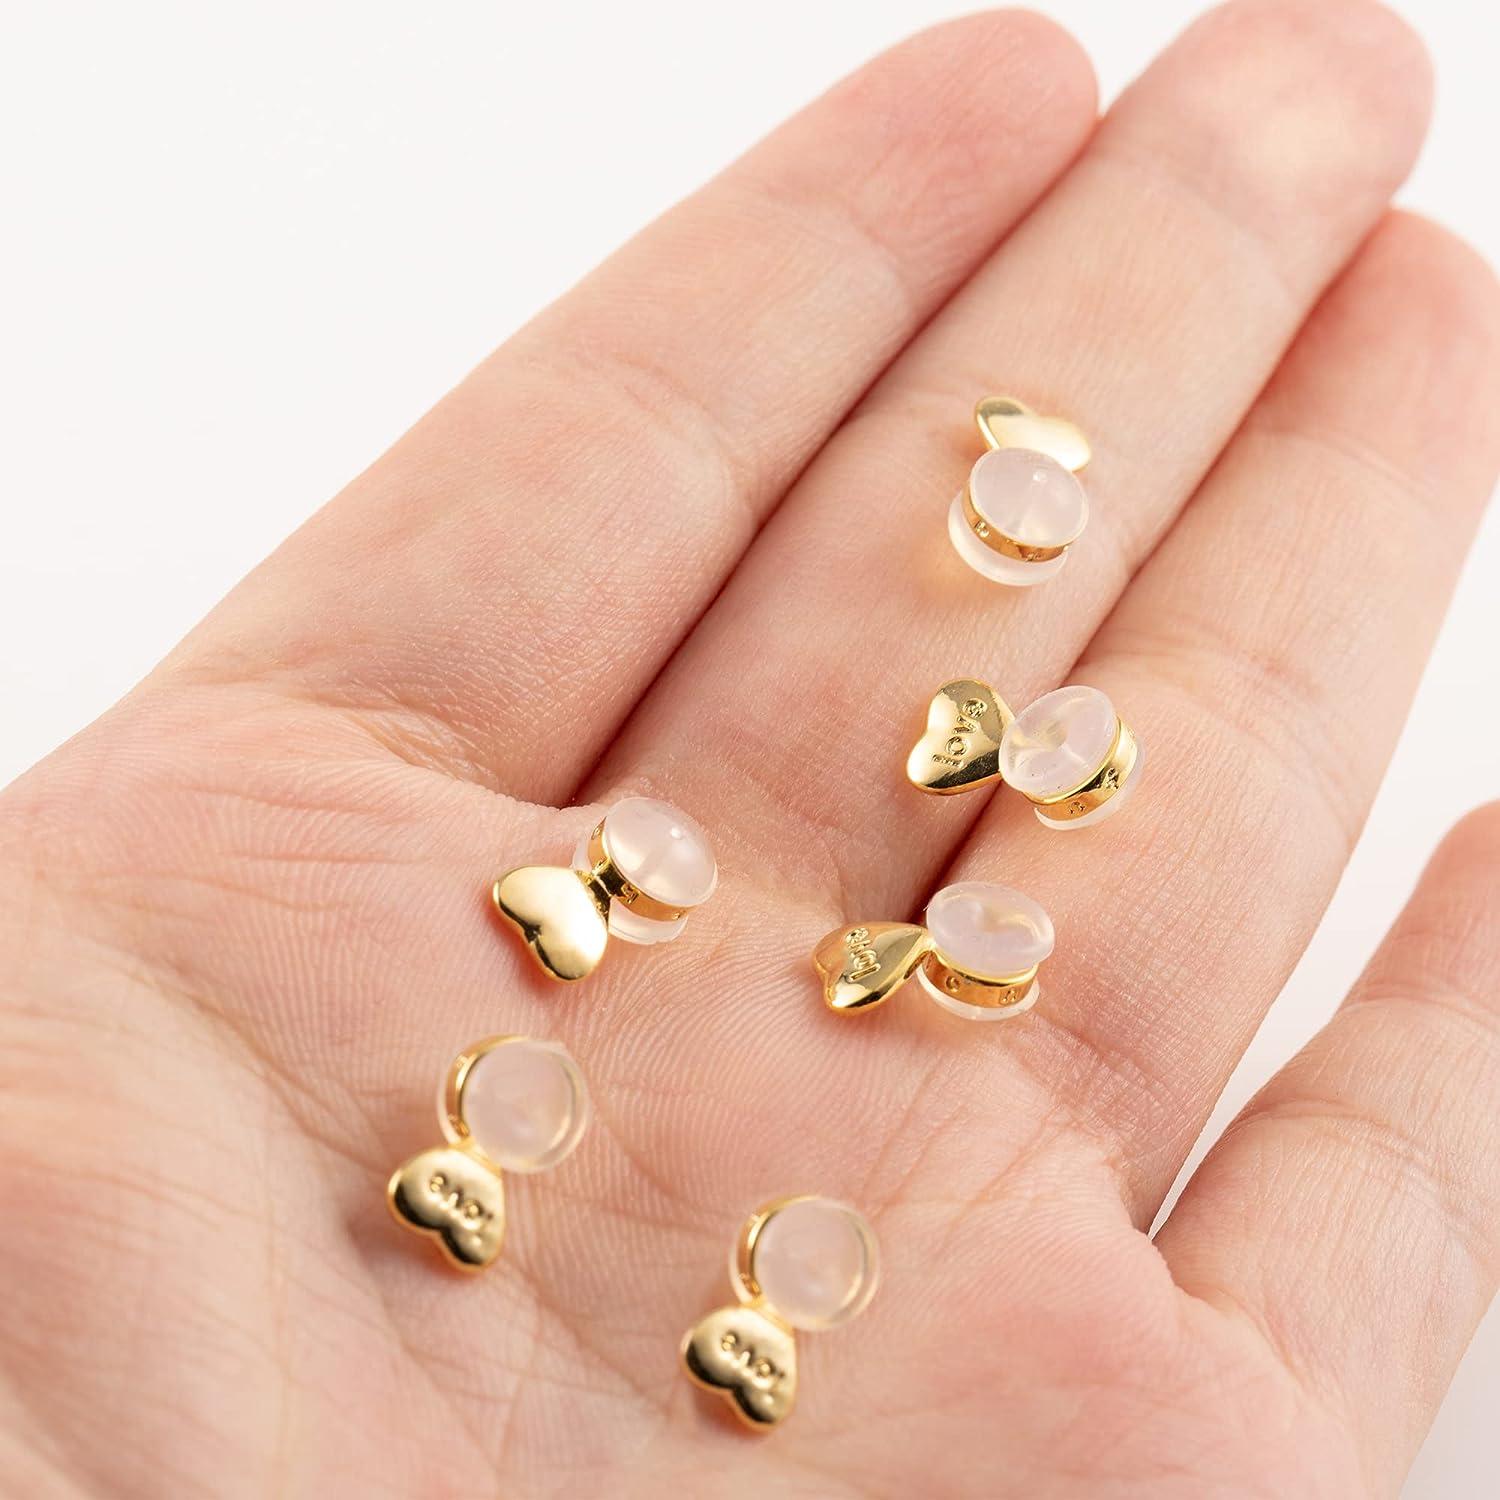 3-Pairs Earring Backs Lifter Adjustable Hypoallergenic Secure Earring Backs  For Heavy Earrings, (Gold)